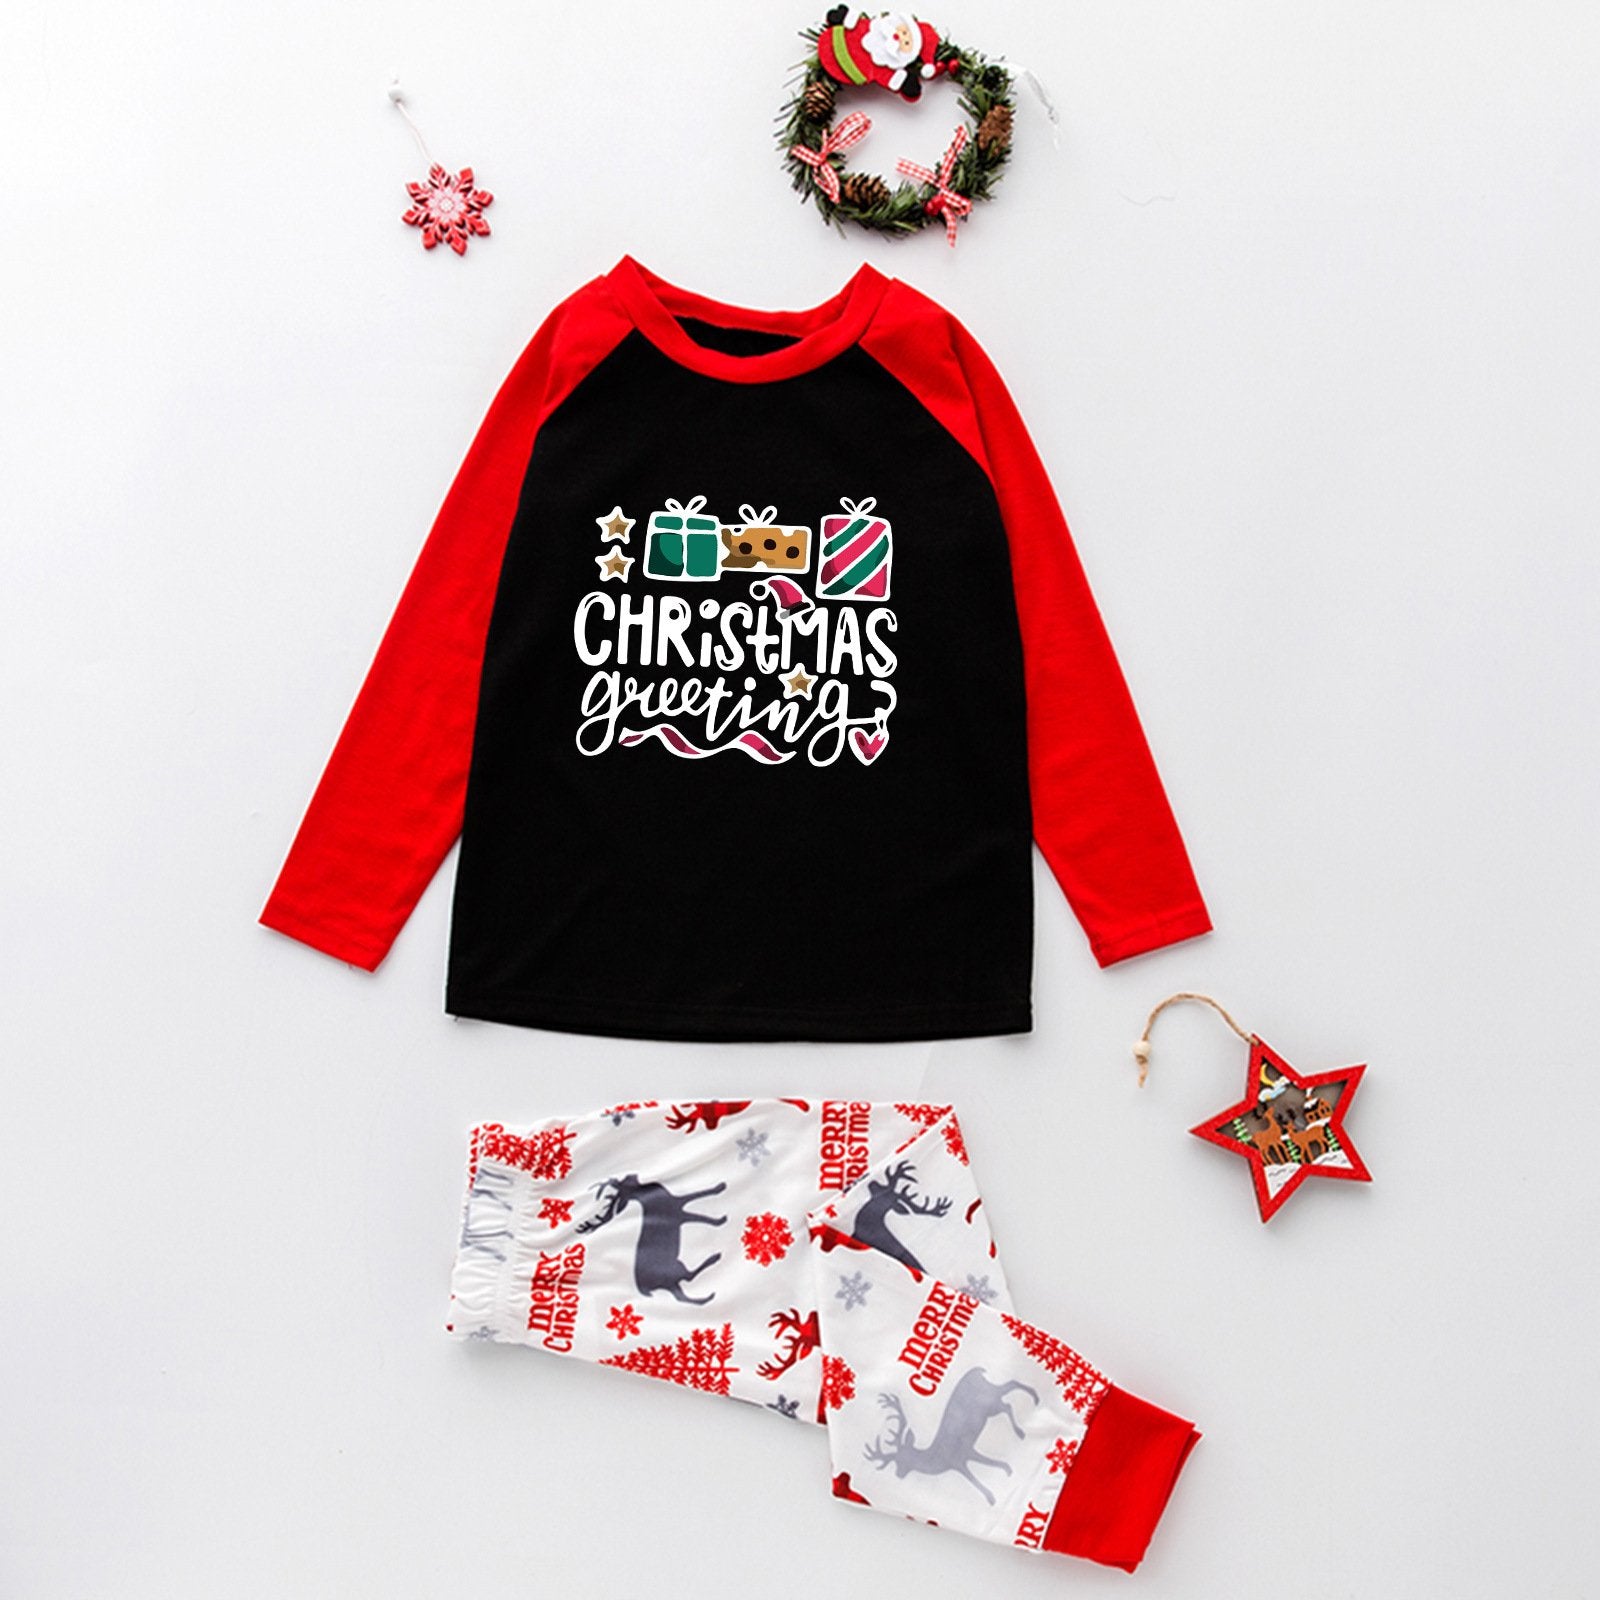 Family Matching Christmas Homewear Letter Print Pajamas